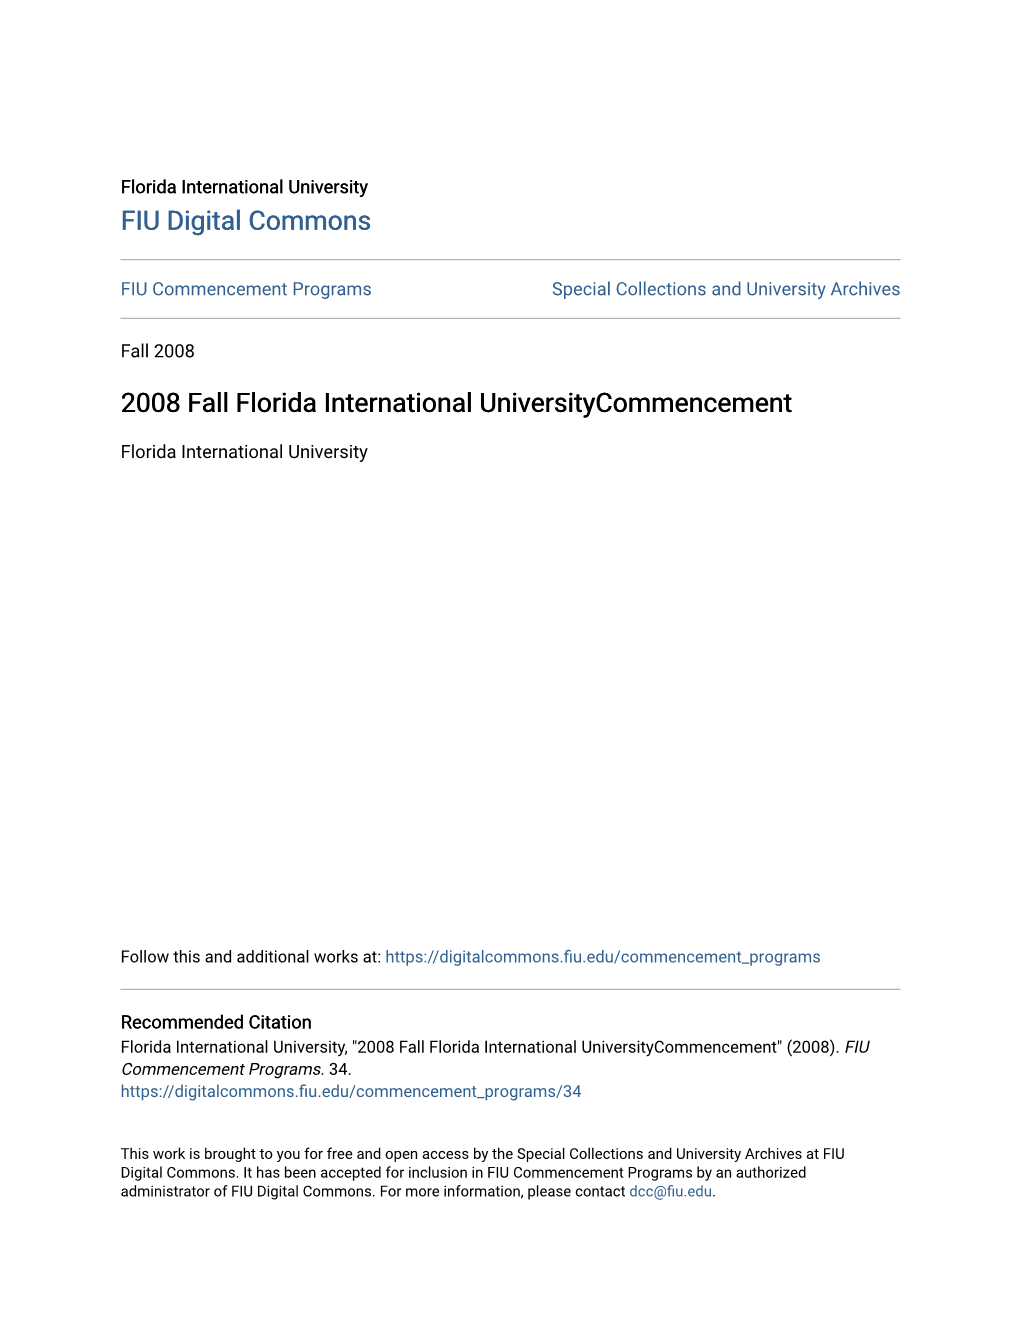 2008 Fall Florida International Universitycommencement